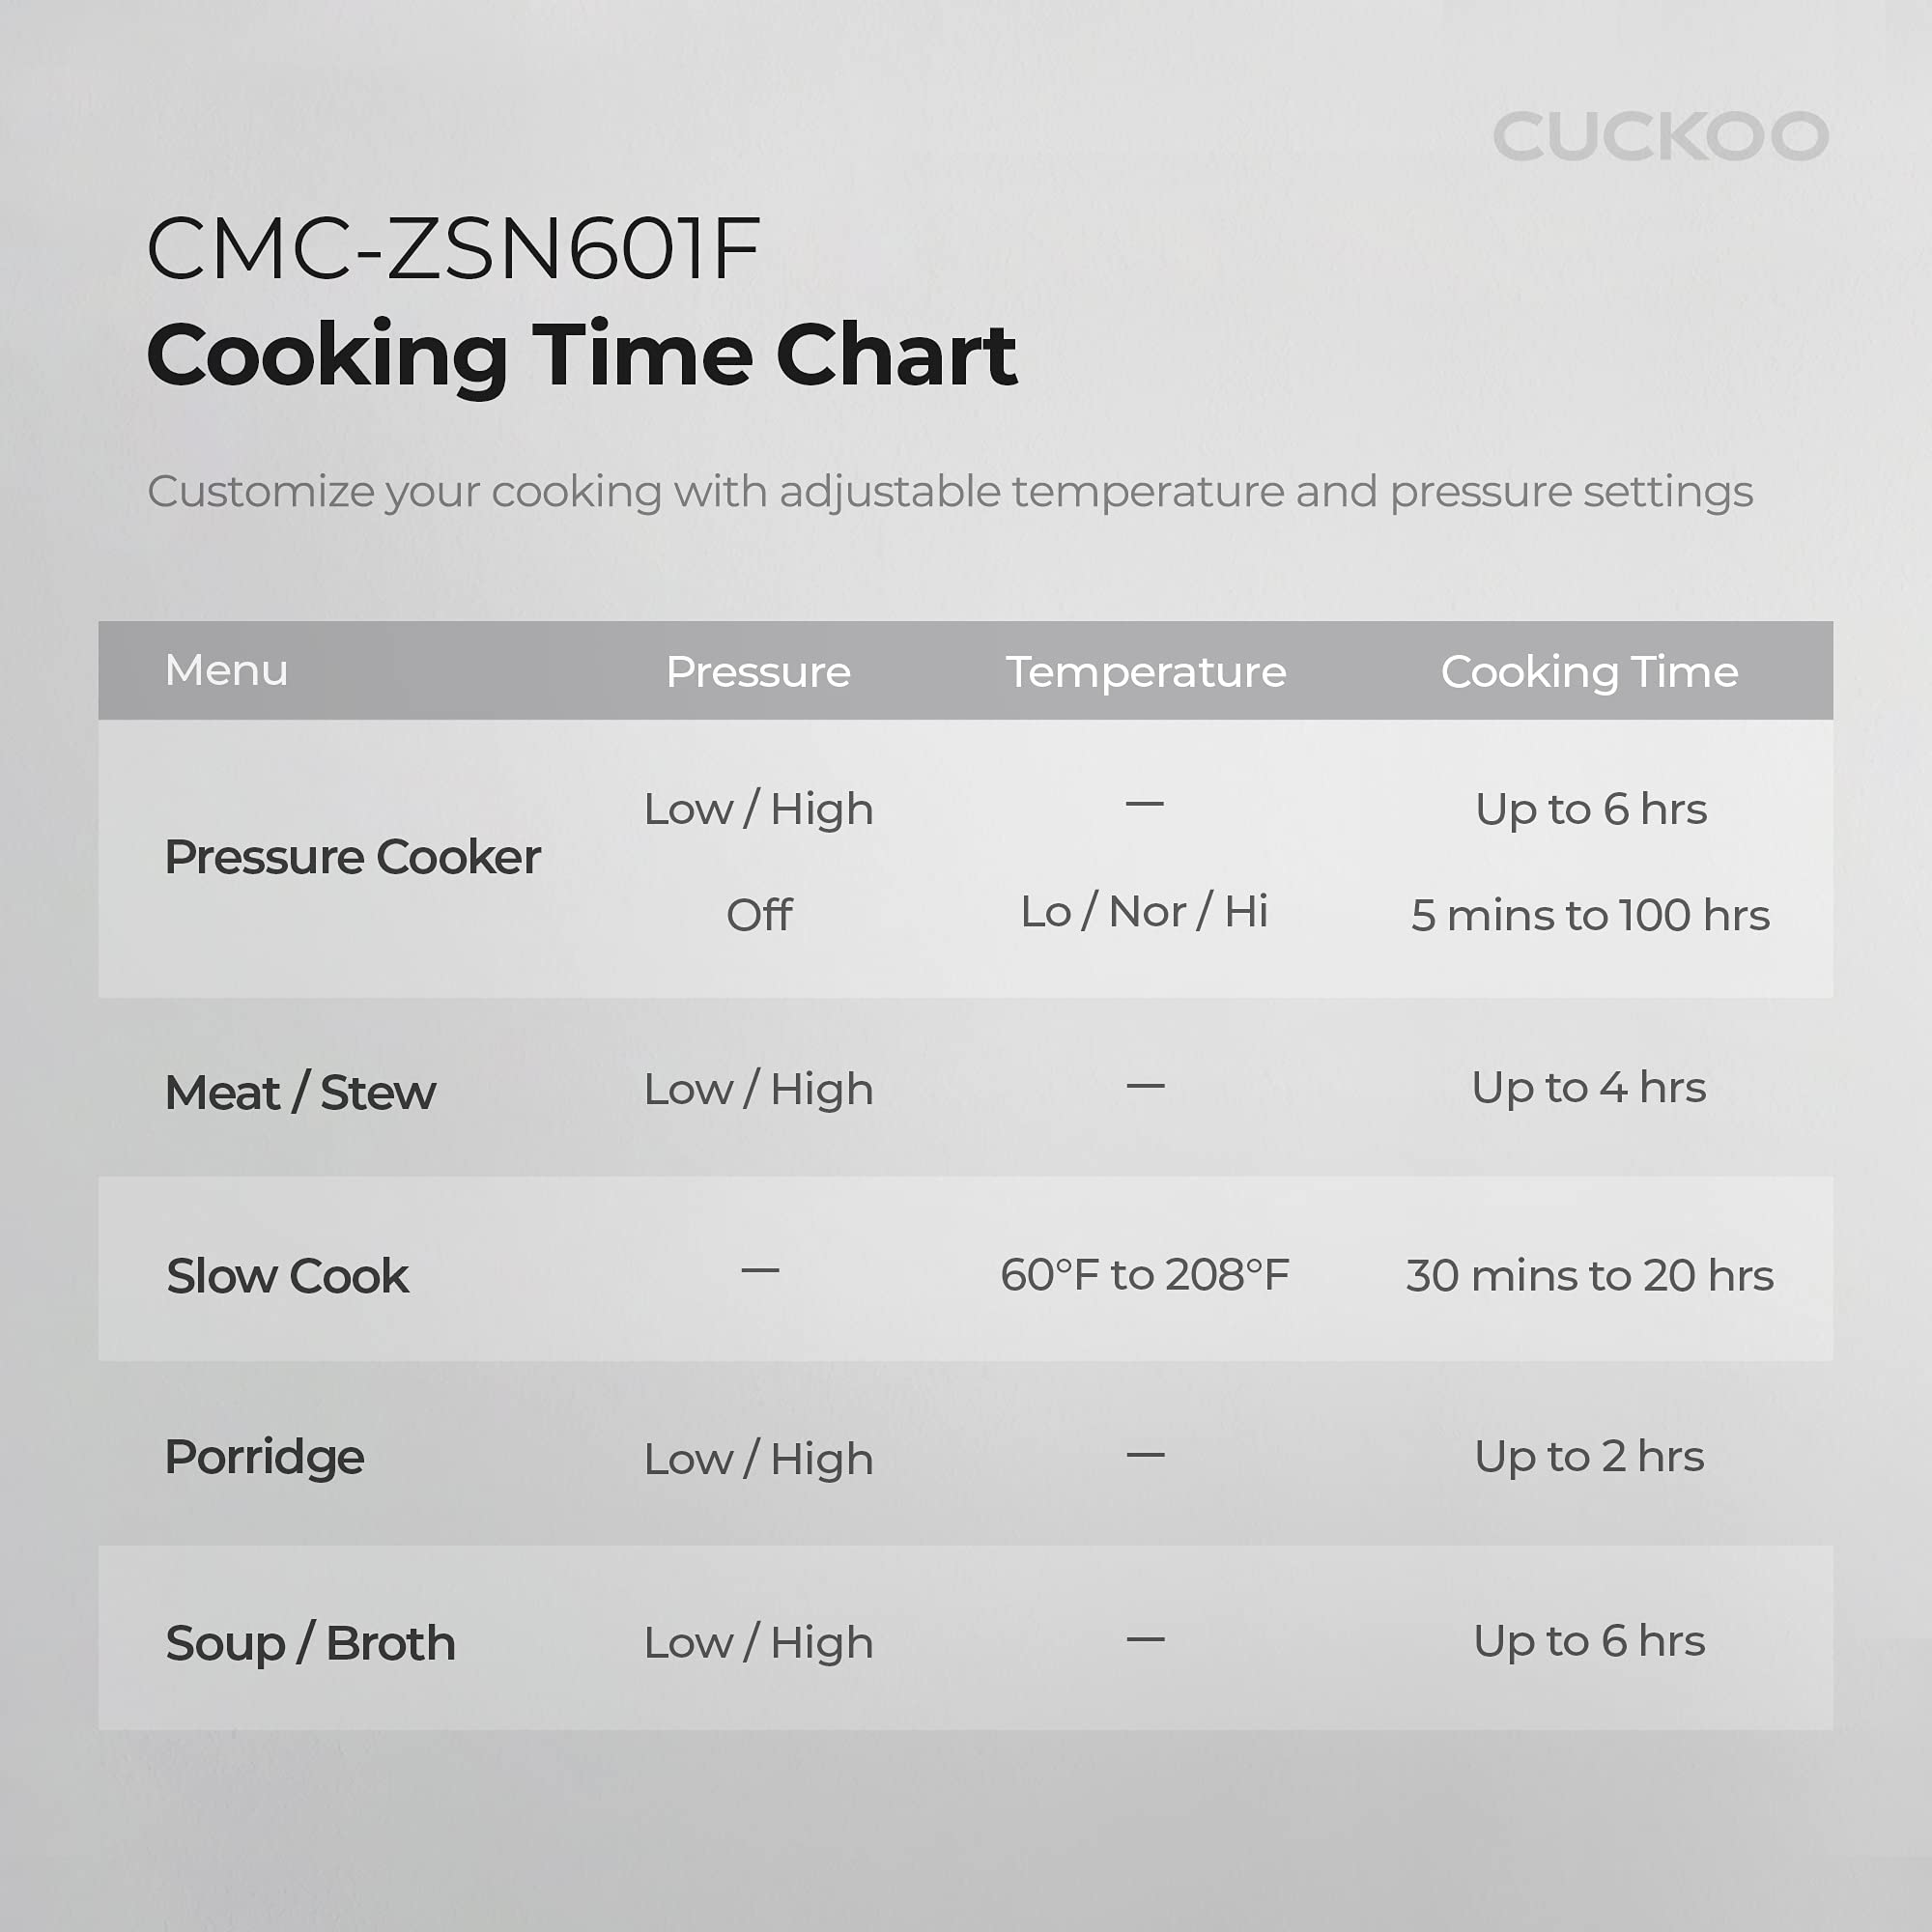 Cuckoo CMC-ZSN601F 8-in-1 Electric Pressure Cooker, Slow Cooker, Sauté, Steamer, Warmer, Sous Vide, 20 Menu Options, Stainless Steel Inner Pot, 6 QT, Black